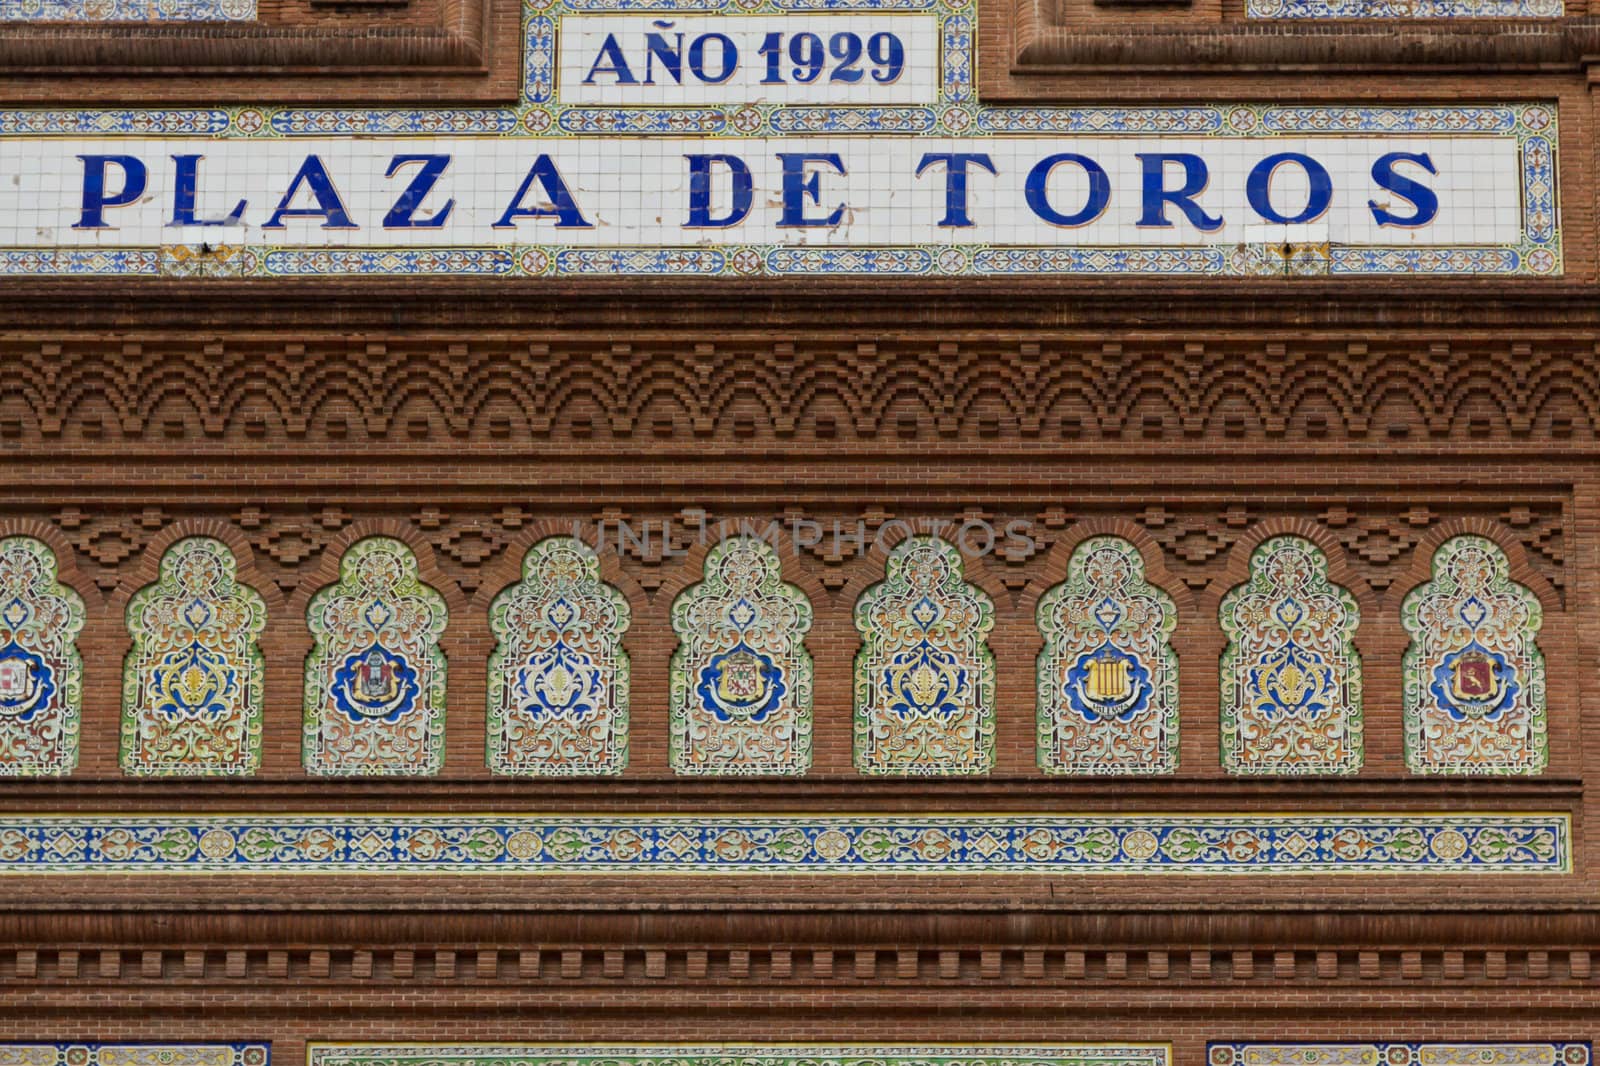 Detail of Madrid's bullfight arena, built in 1929